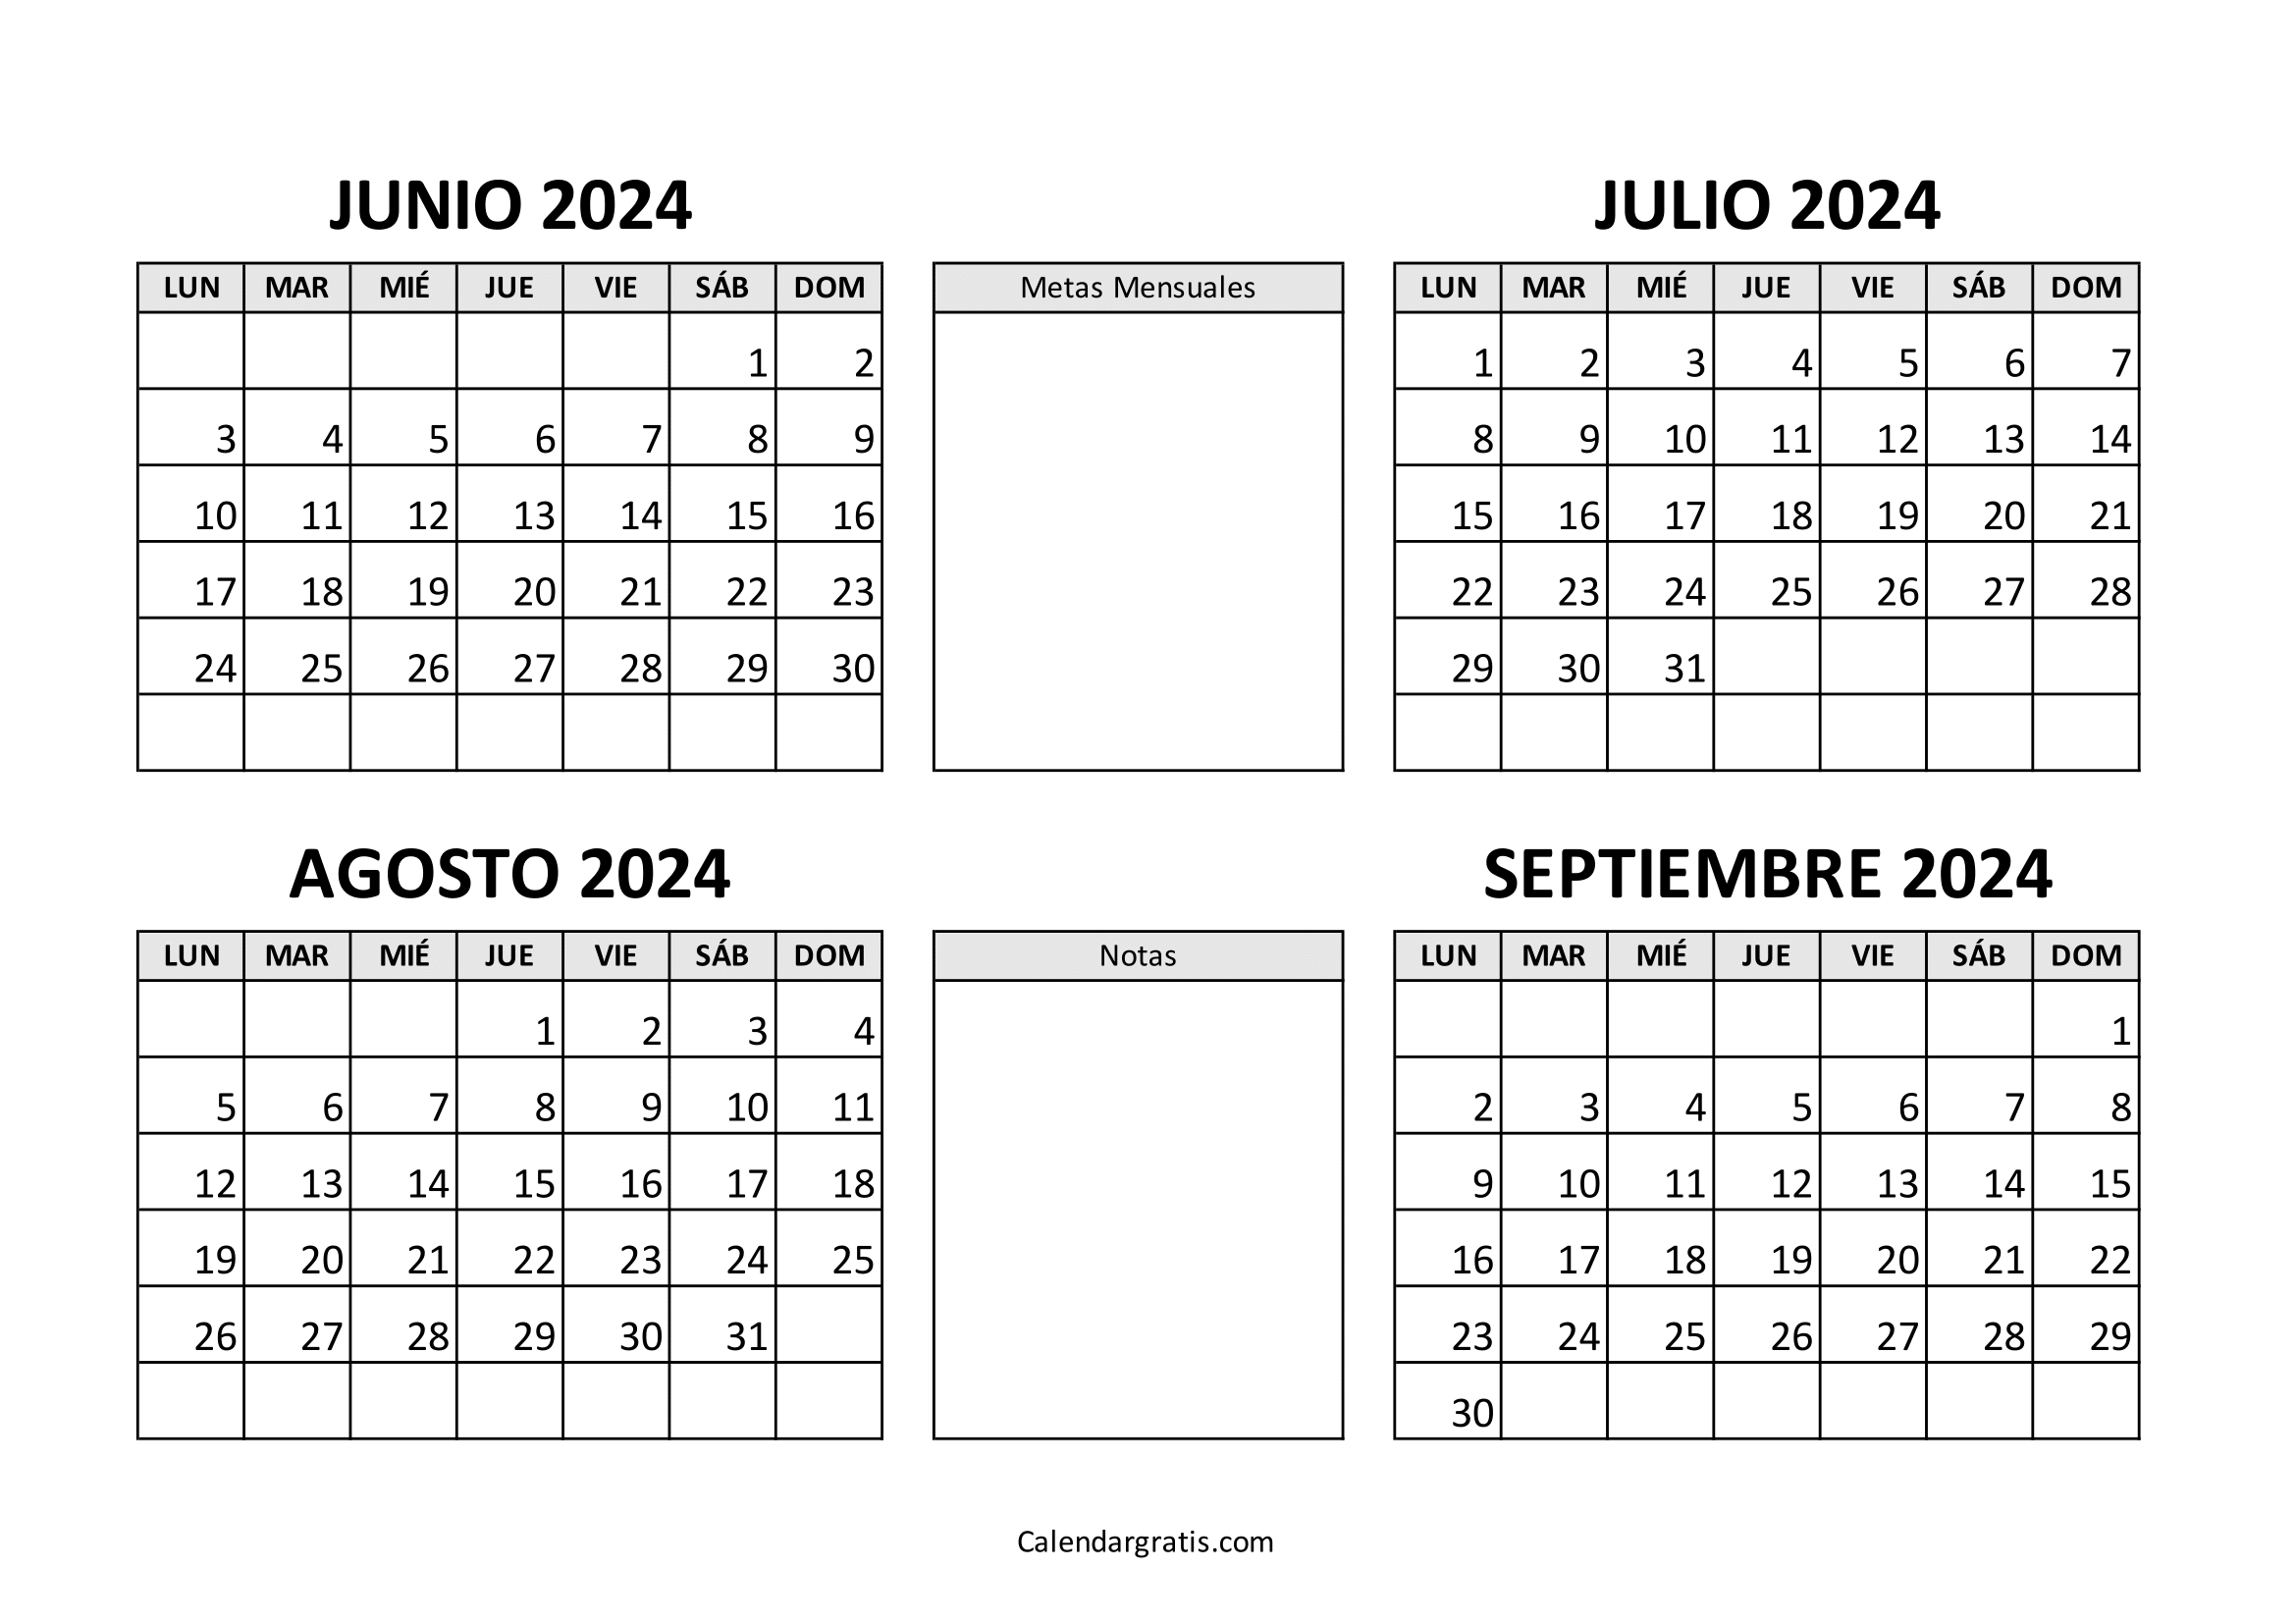 Calendario junio julio agosto septiembre 2024 para imprimir